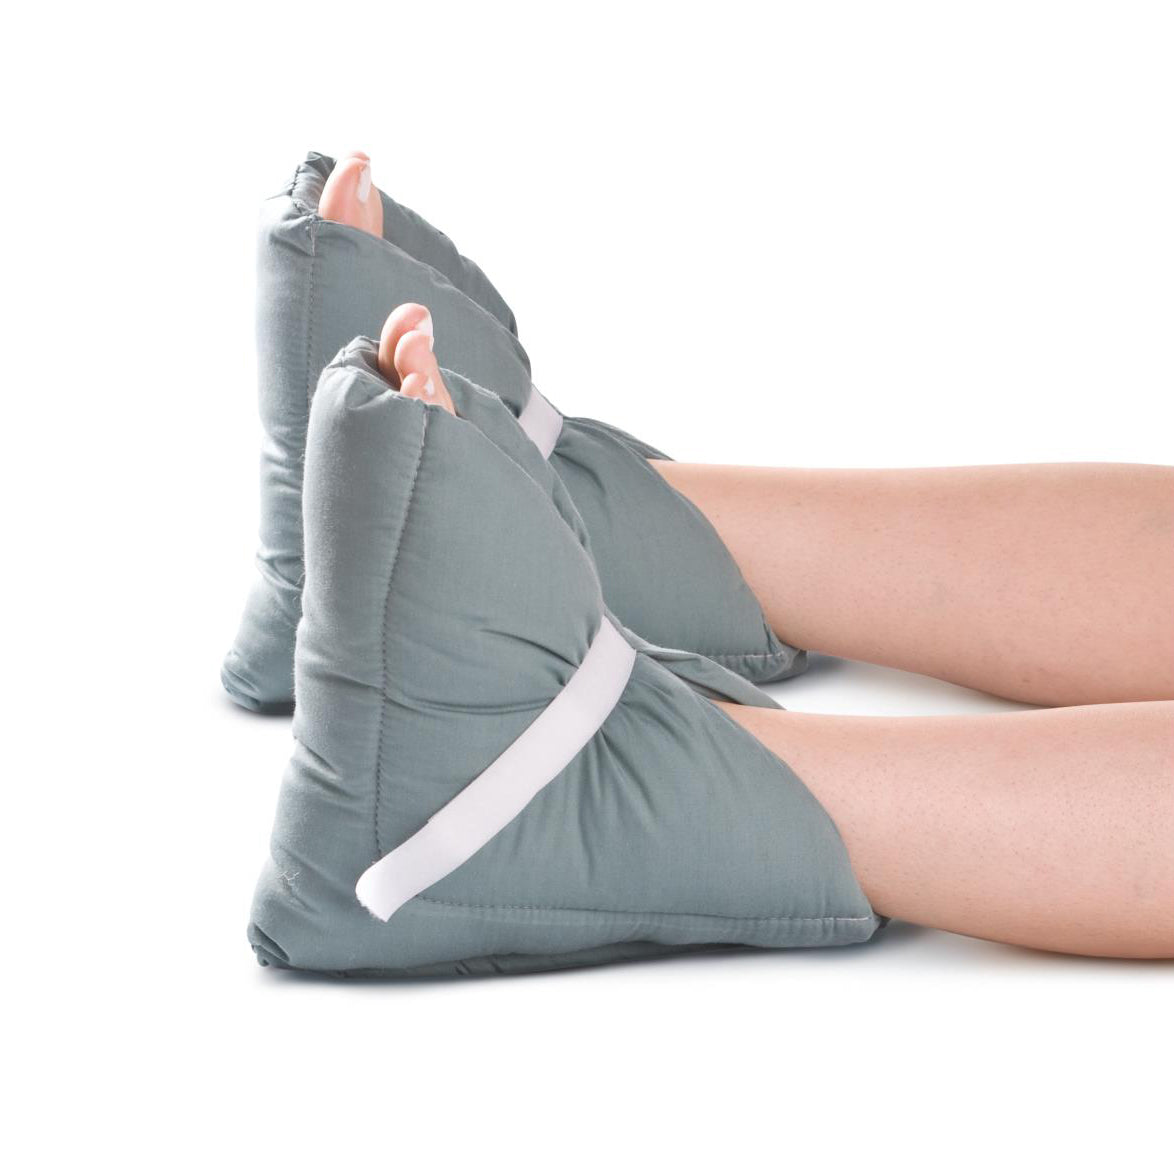 Medline Comfort Plus Heel Protector (Pack of 2)